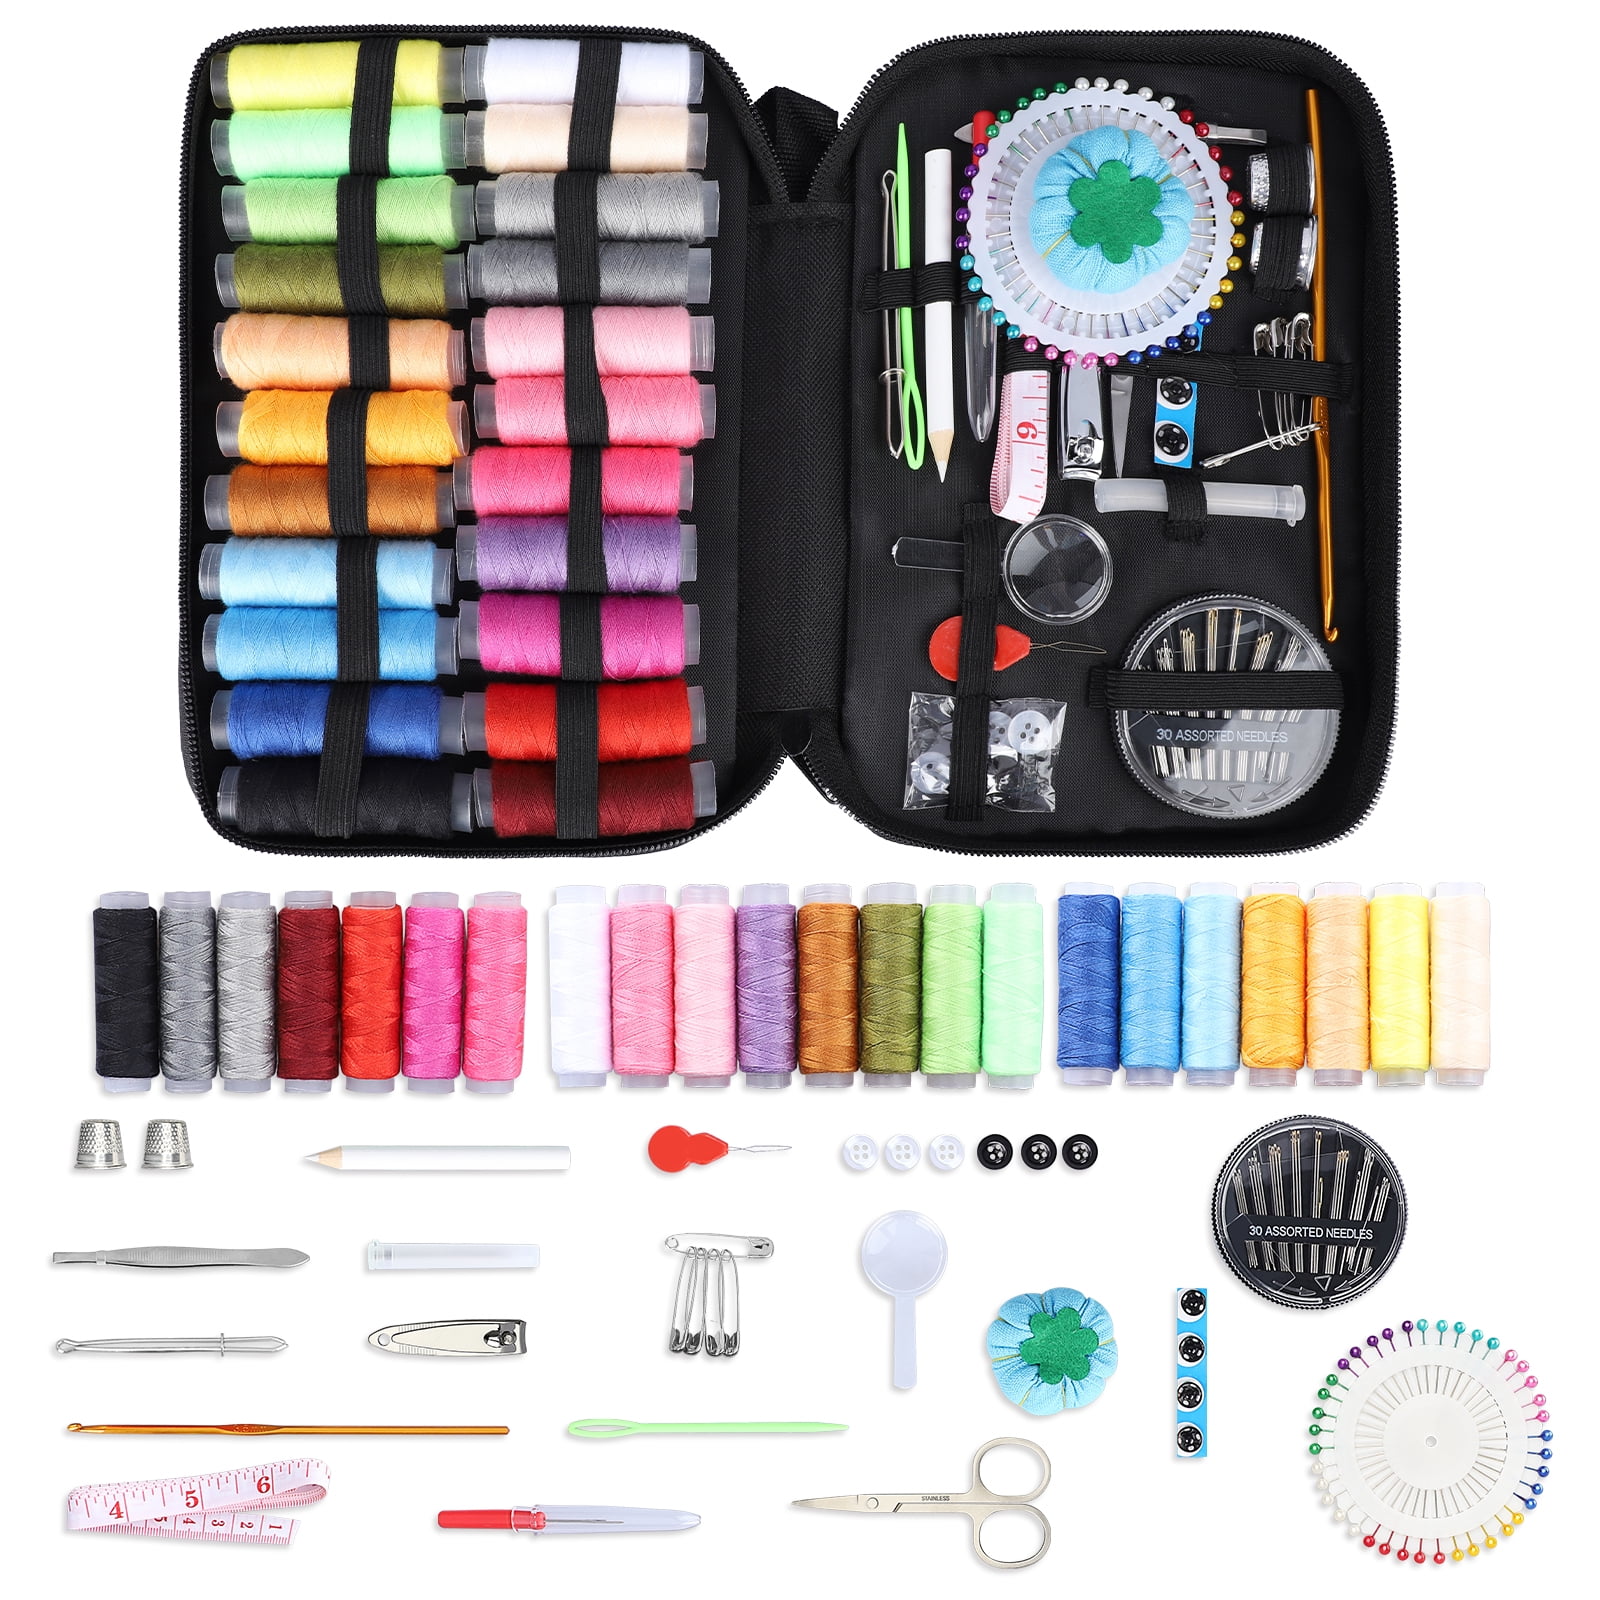 68*Home Travel Thread Threader Needle Tape Measure Scissor Sewing Kit Emergency 